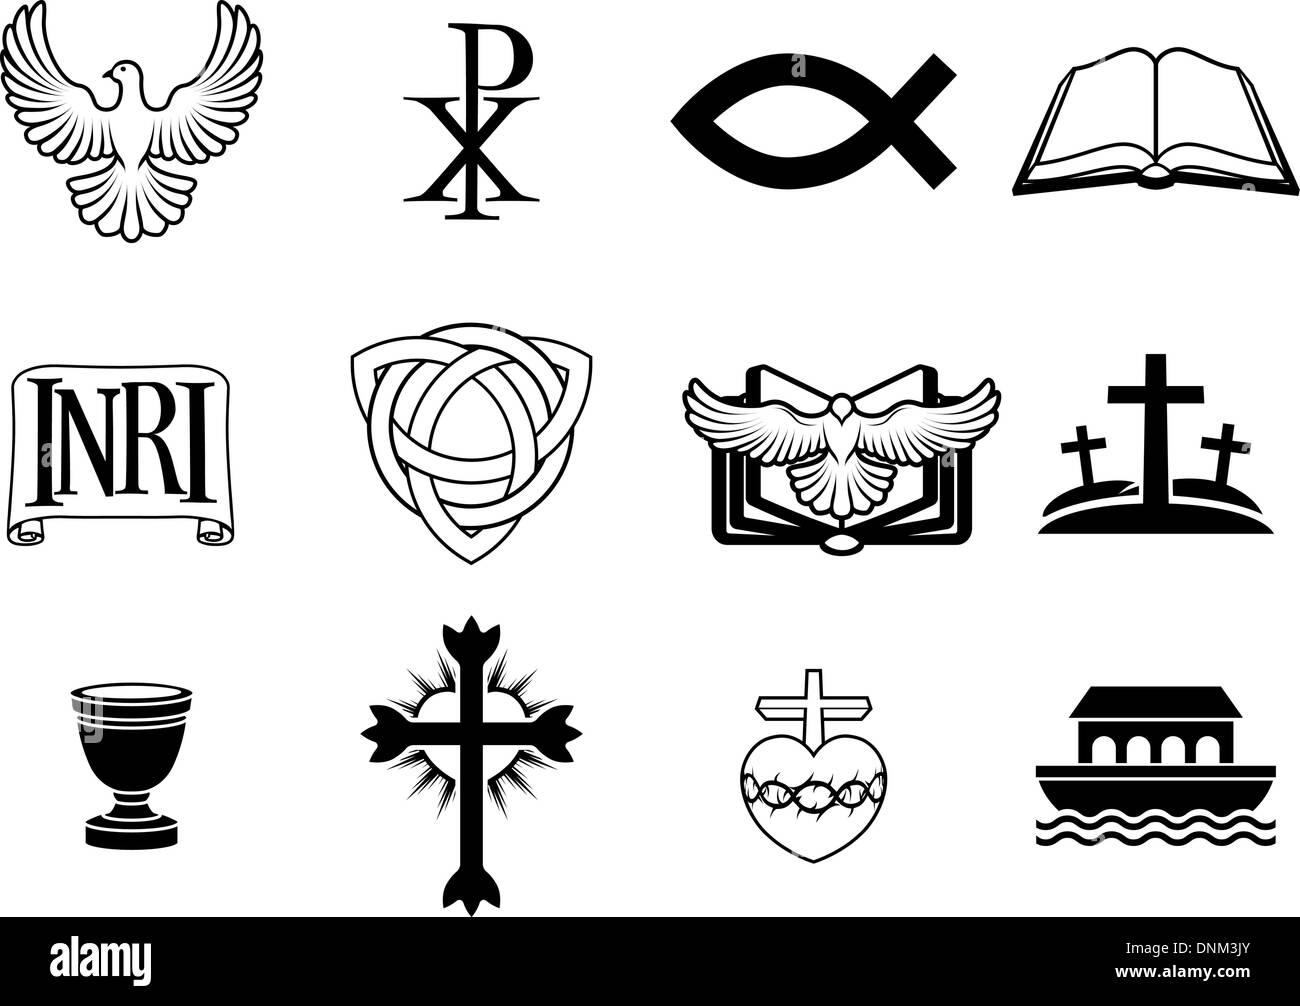 A set of Christian icons and symbols, including dove, Chi Ro, fish symbol, bible, INRI sign, trinity christogram, cross, communi Stock Vector